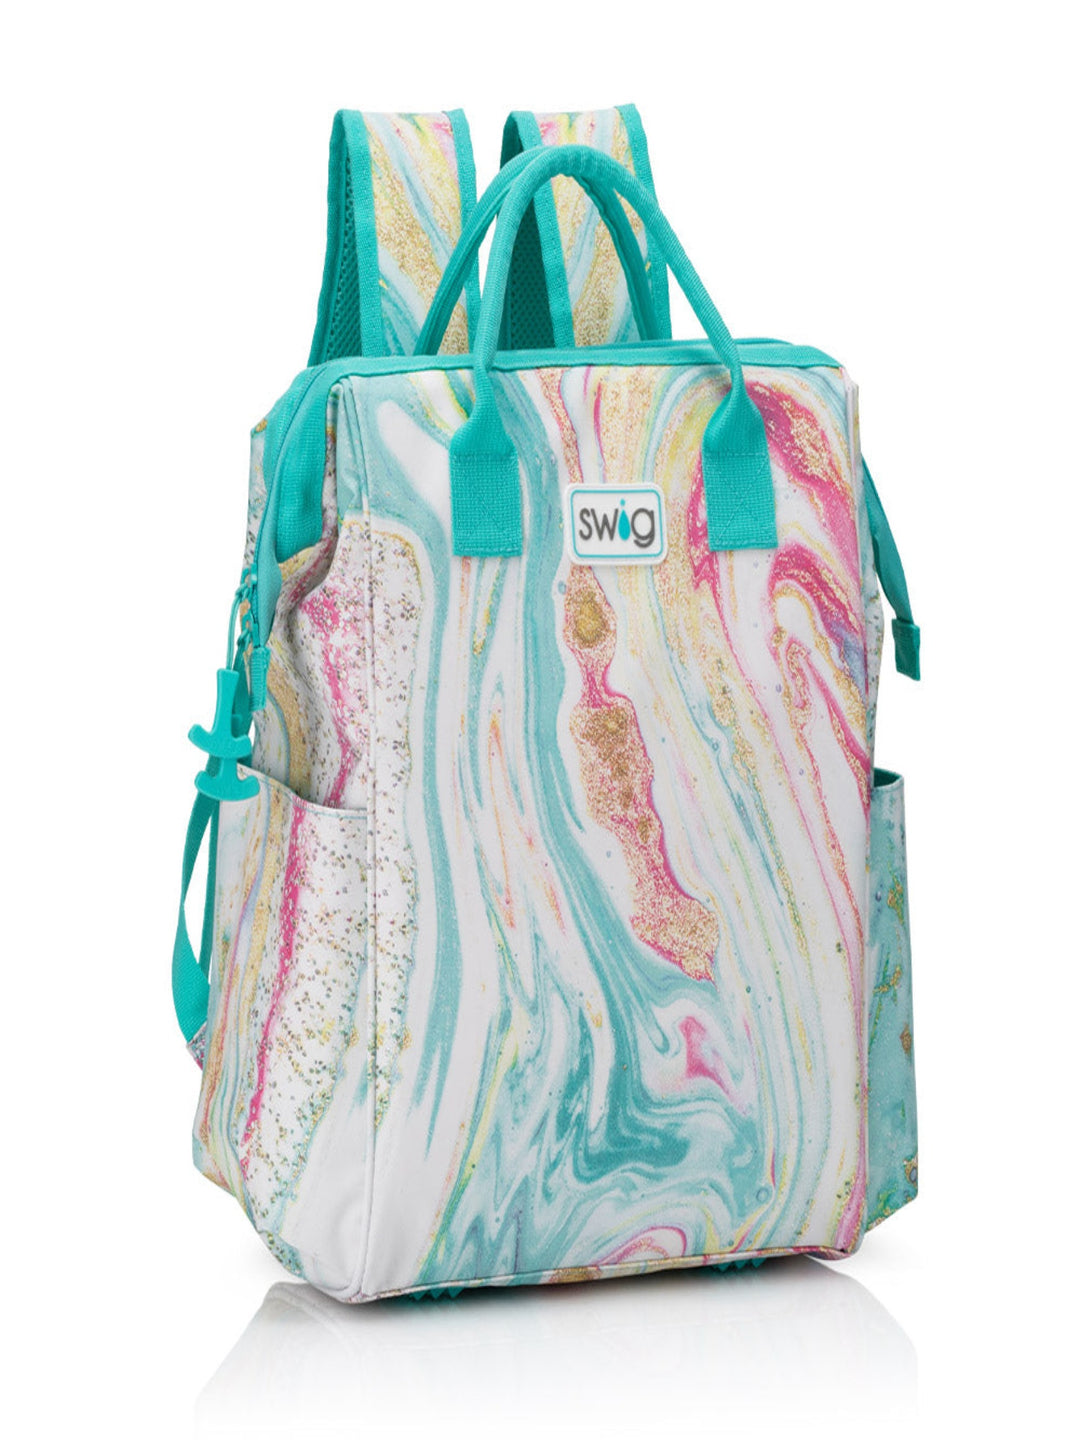 Packi Backpack Cooler by Swig